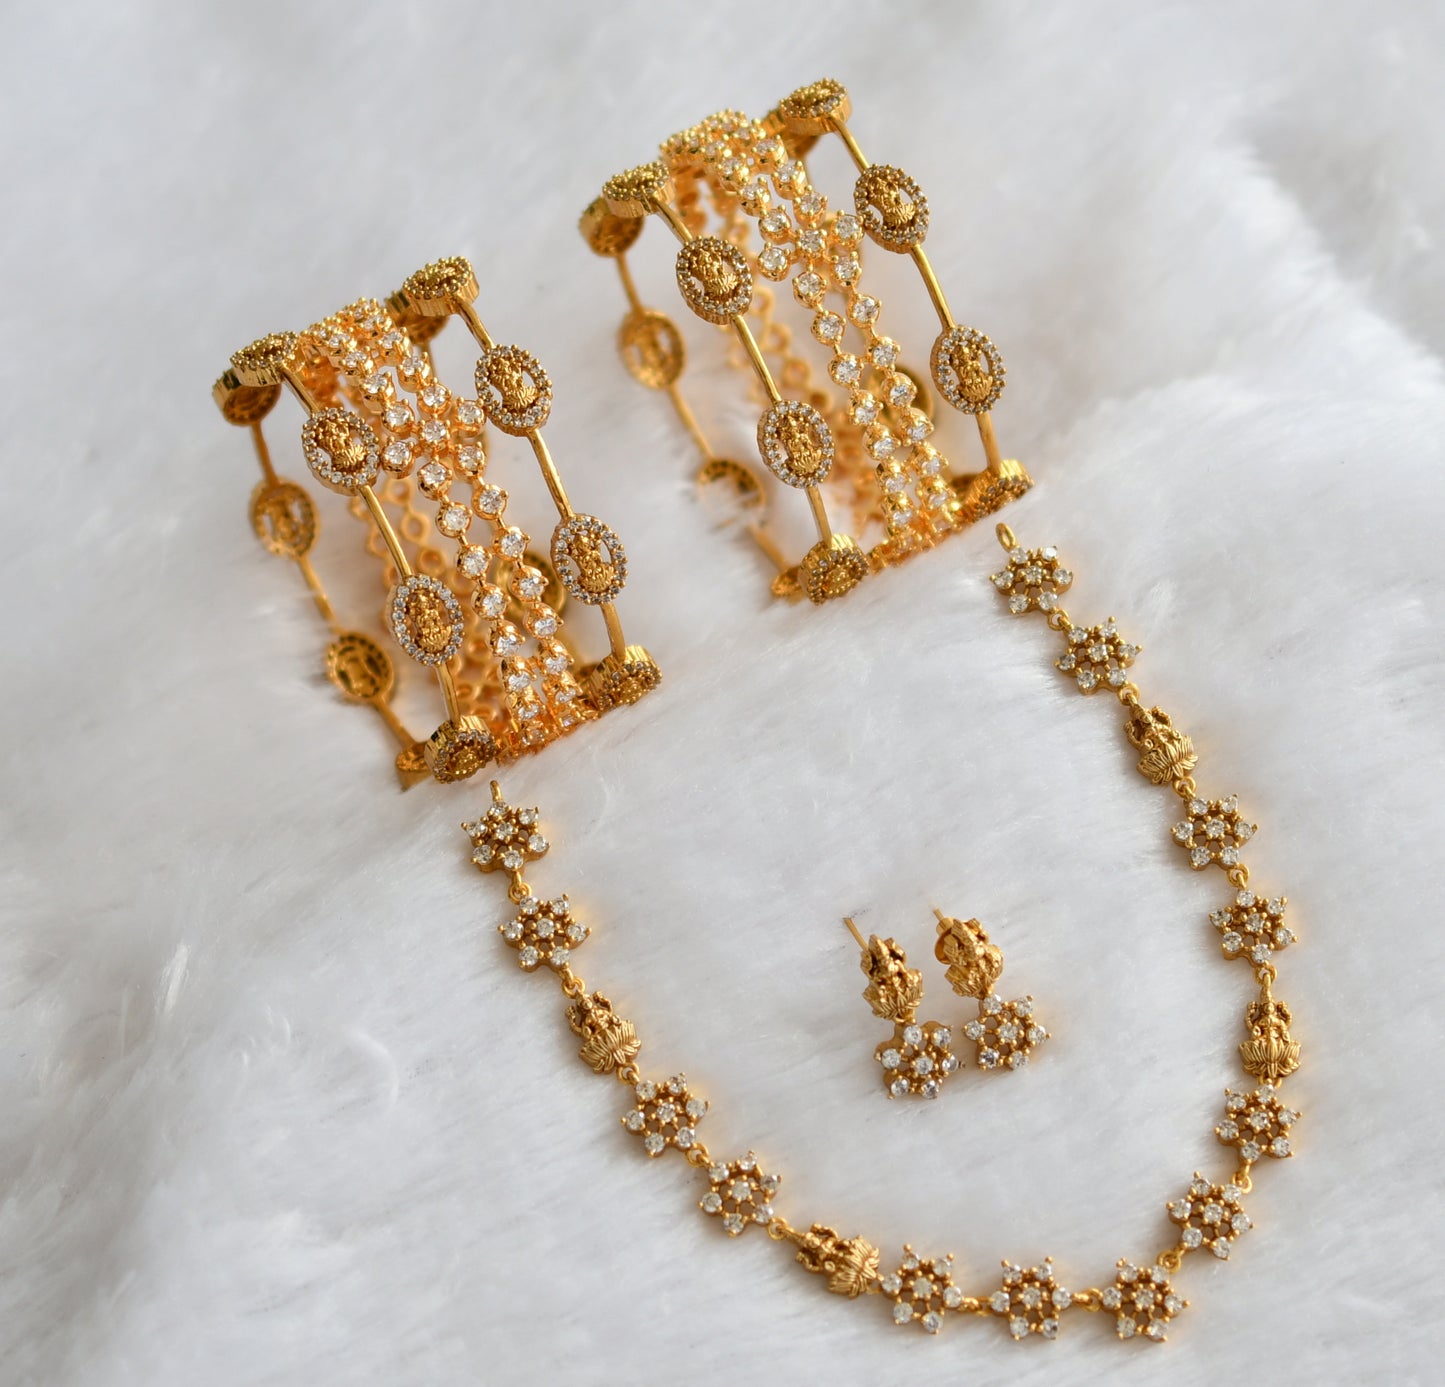 Matte finish cz white lakshmi flower necklace set with set of 6 bangles combo set(2.6) dj-46316